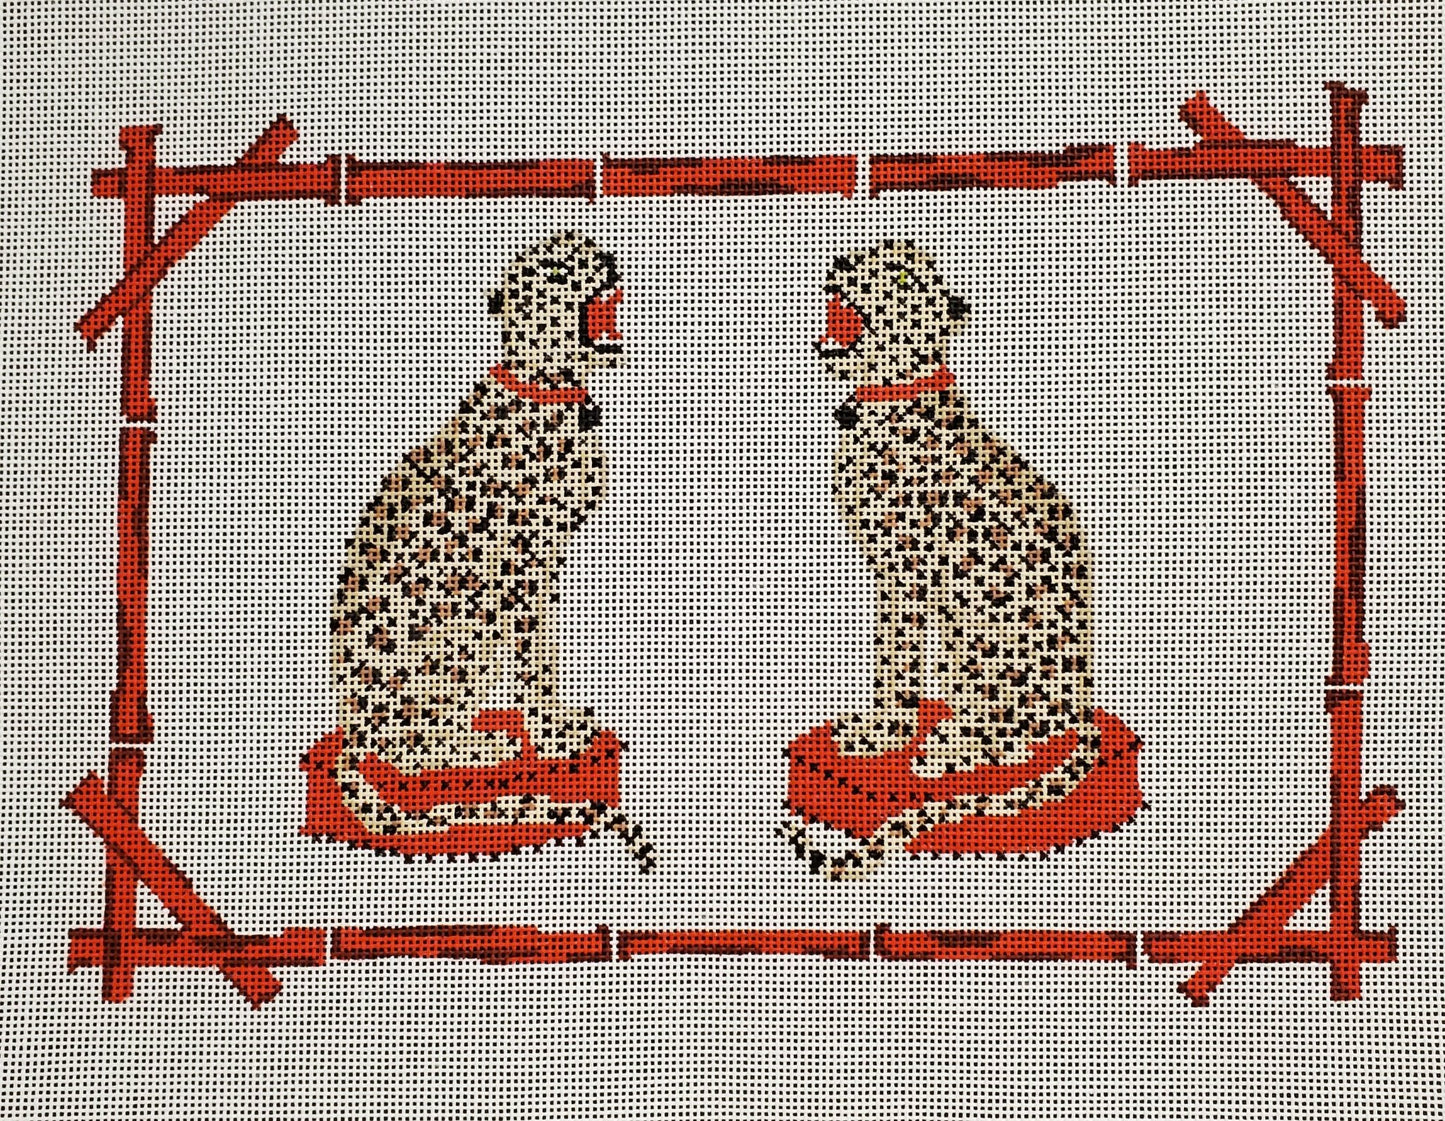 Cheetah Girls - The Flying Needles